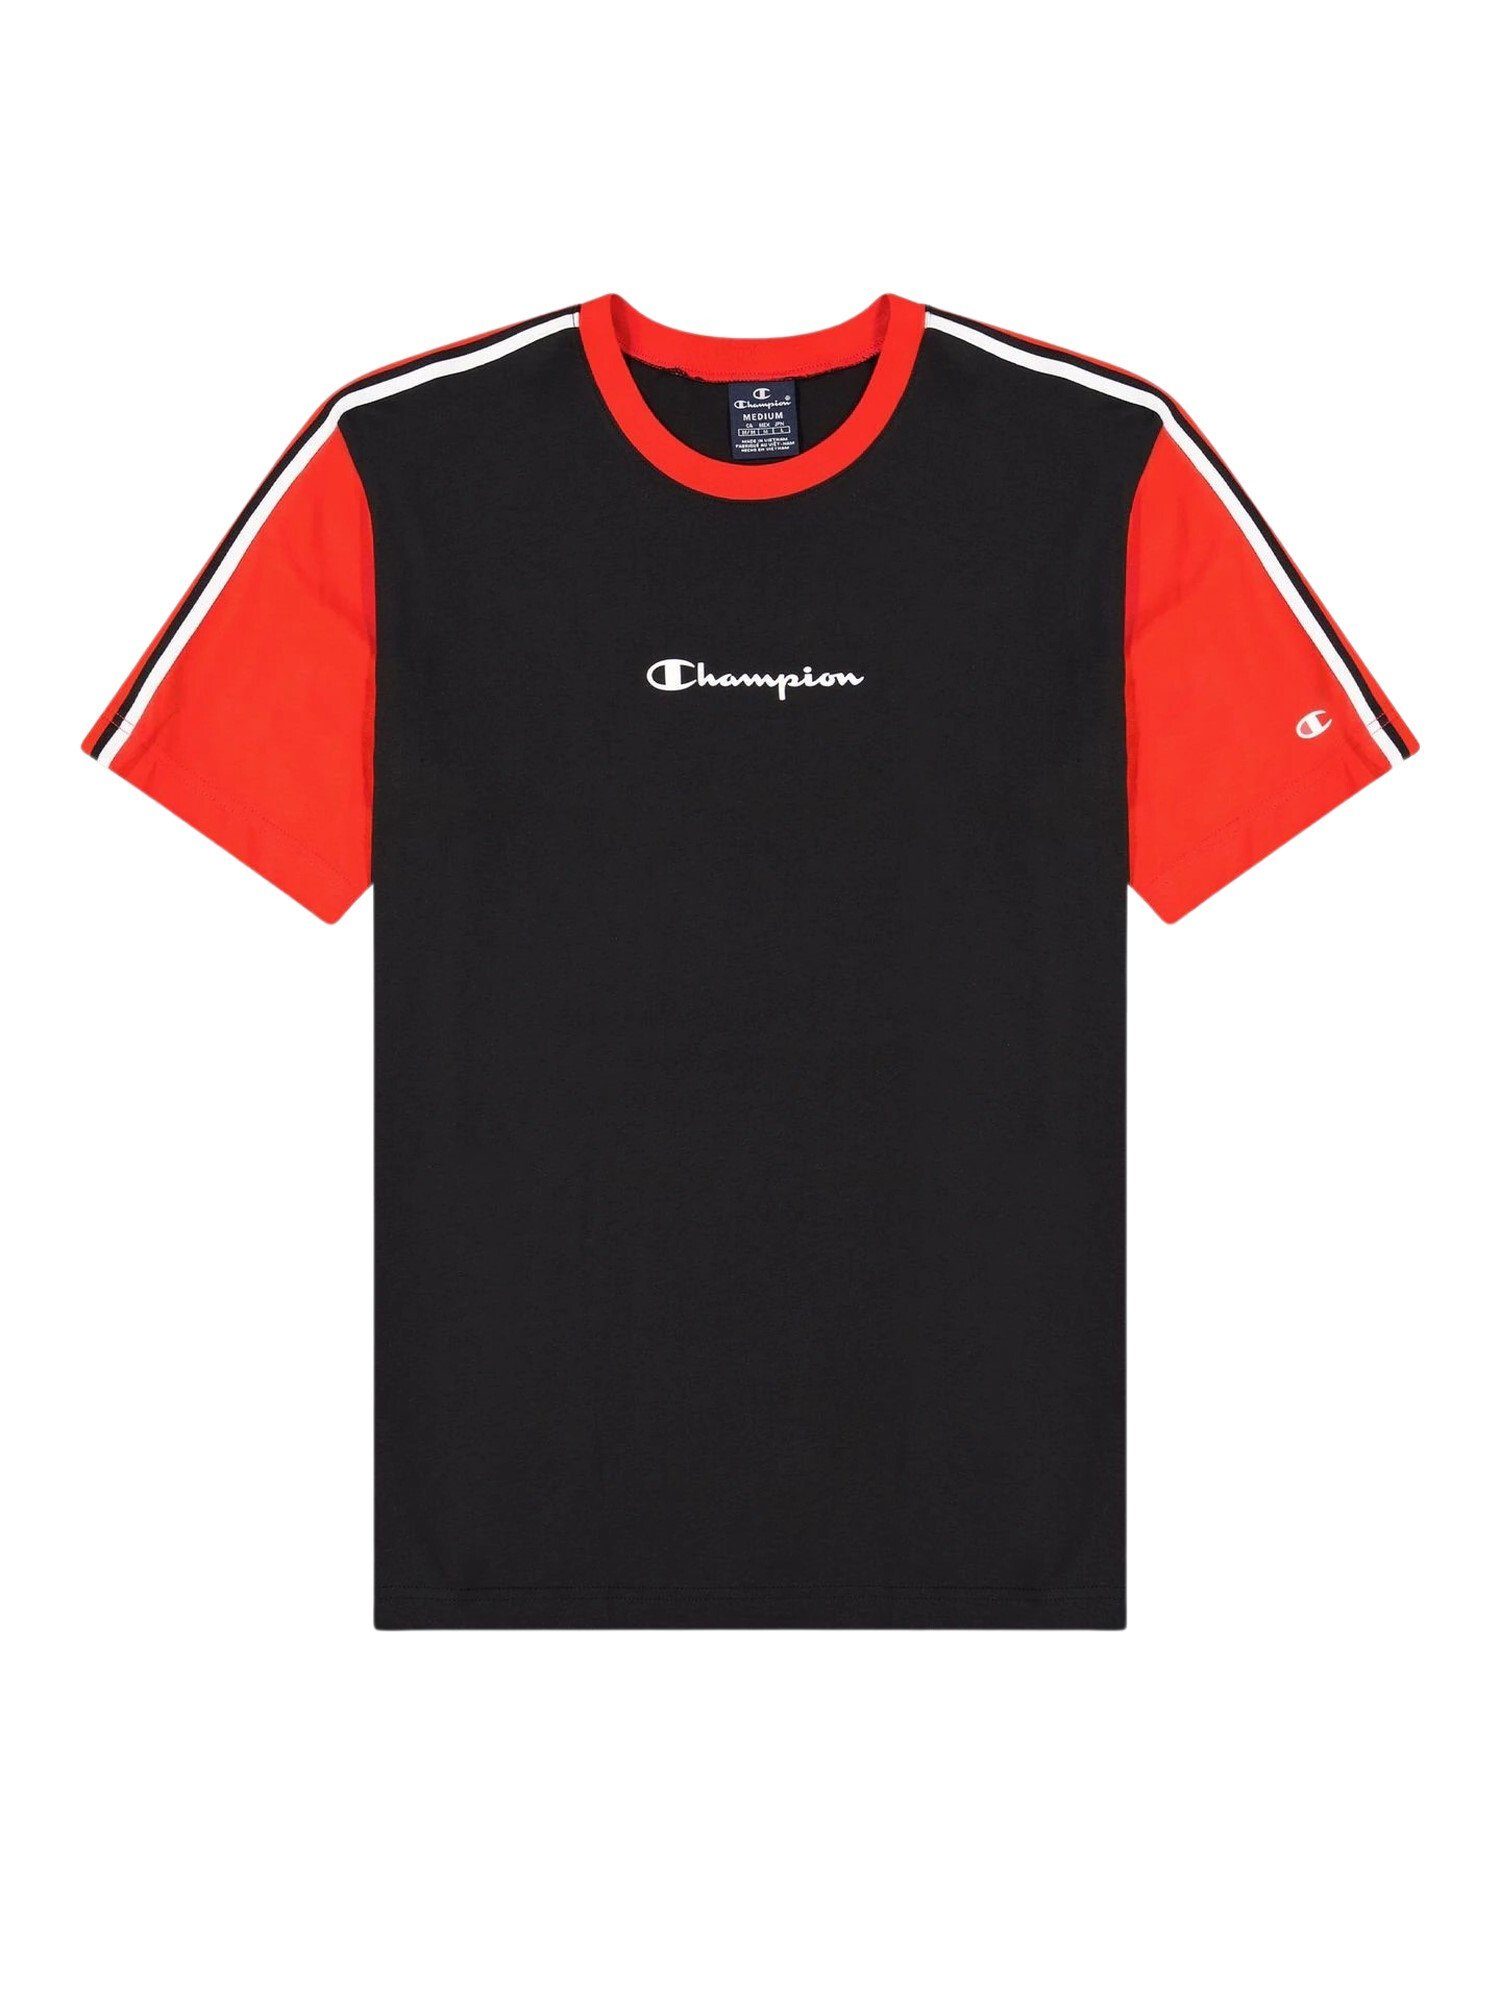 Jacquardband schwarz mit Rundhals-T-Shirt Shirt in Comfort T-Shirt Champion